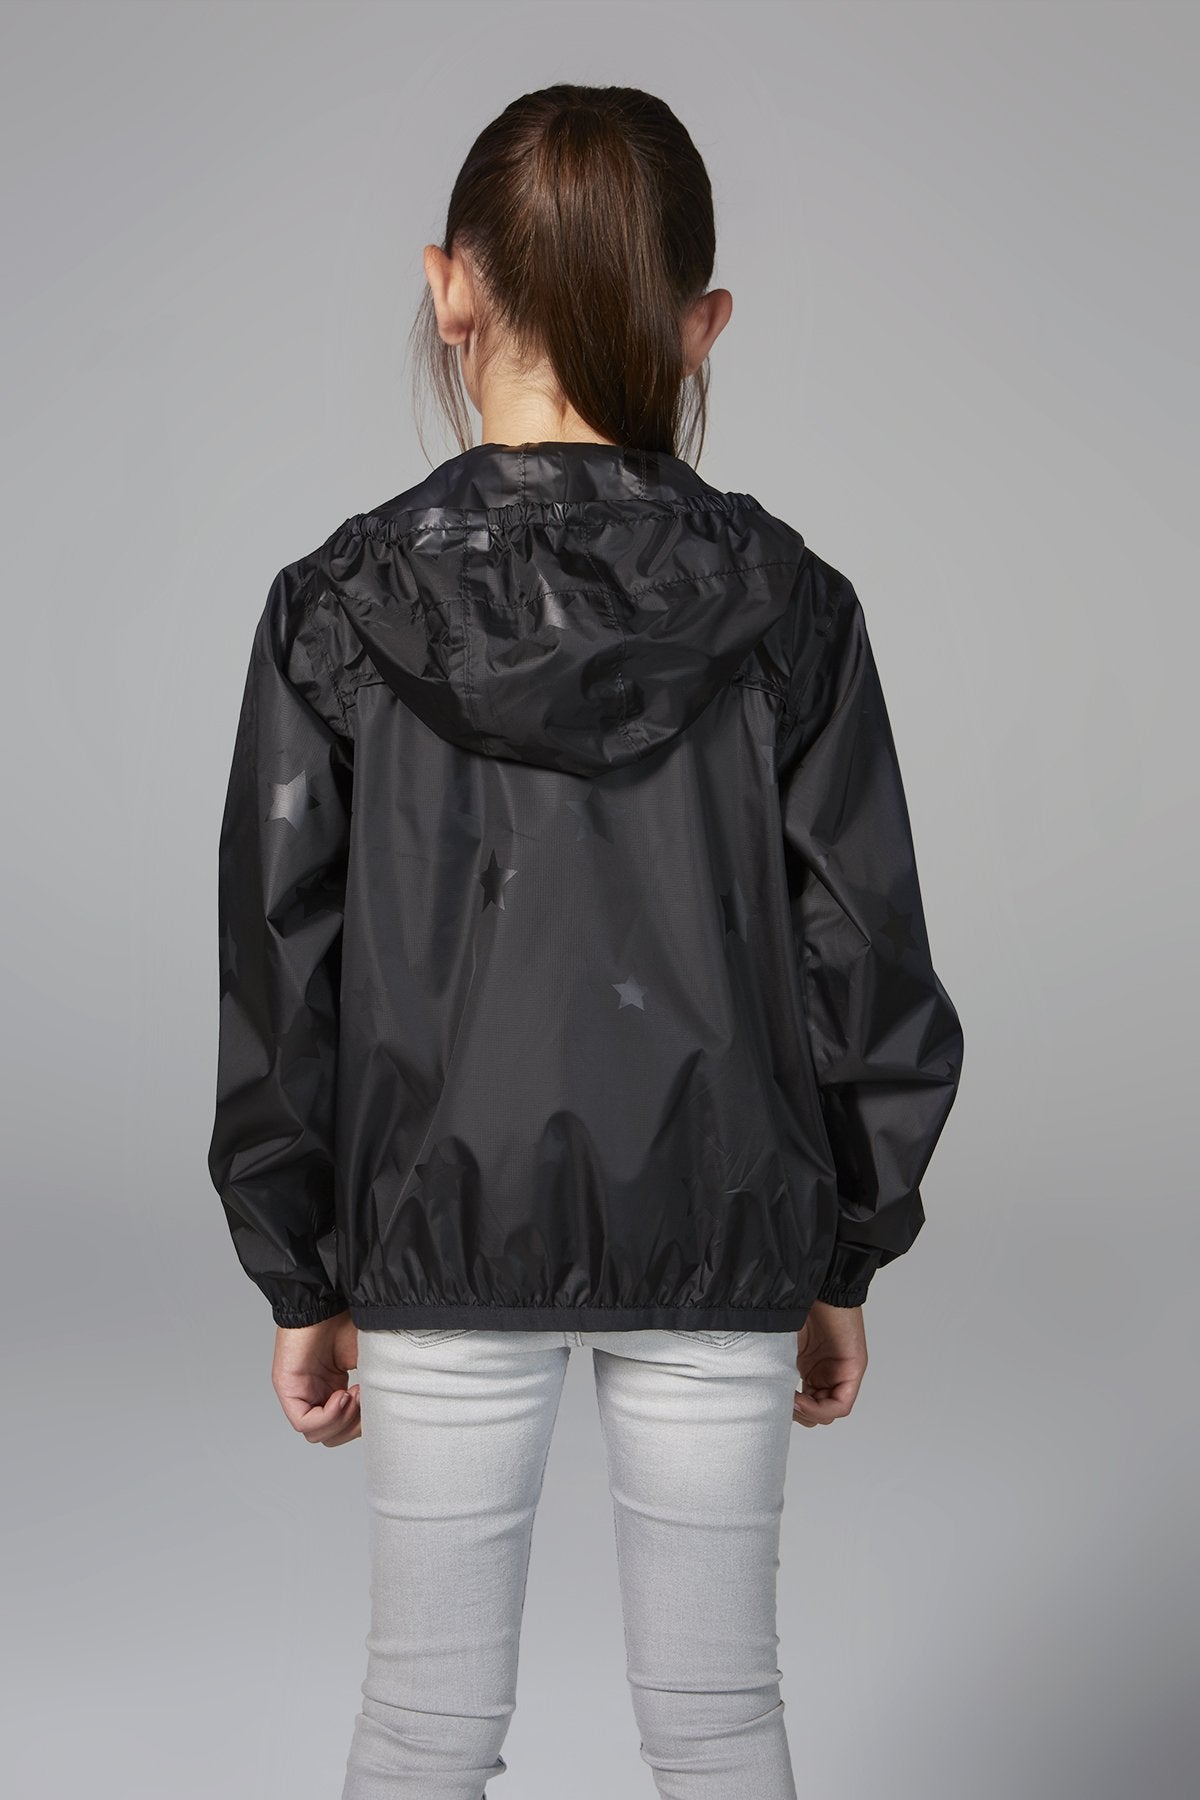 Kids black gloss stars packable rain jacket and windbreaker